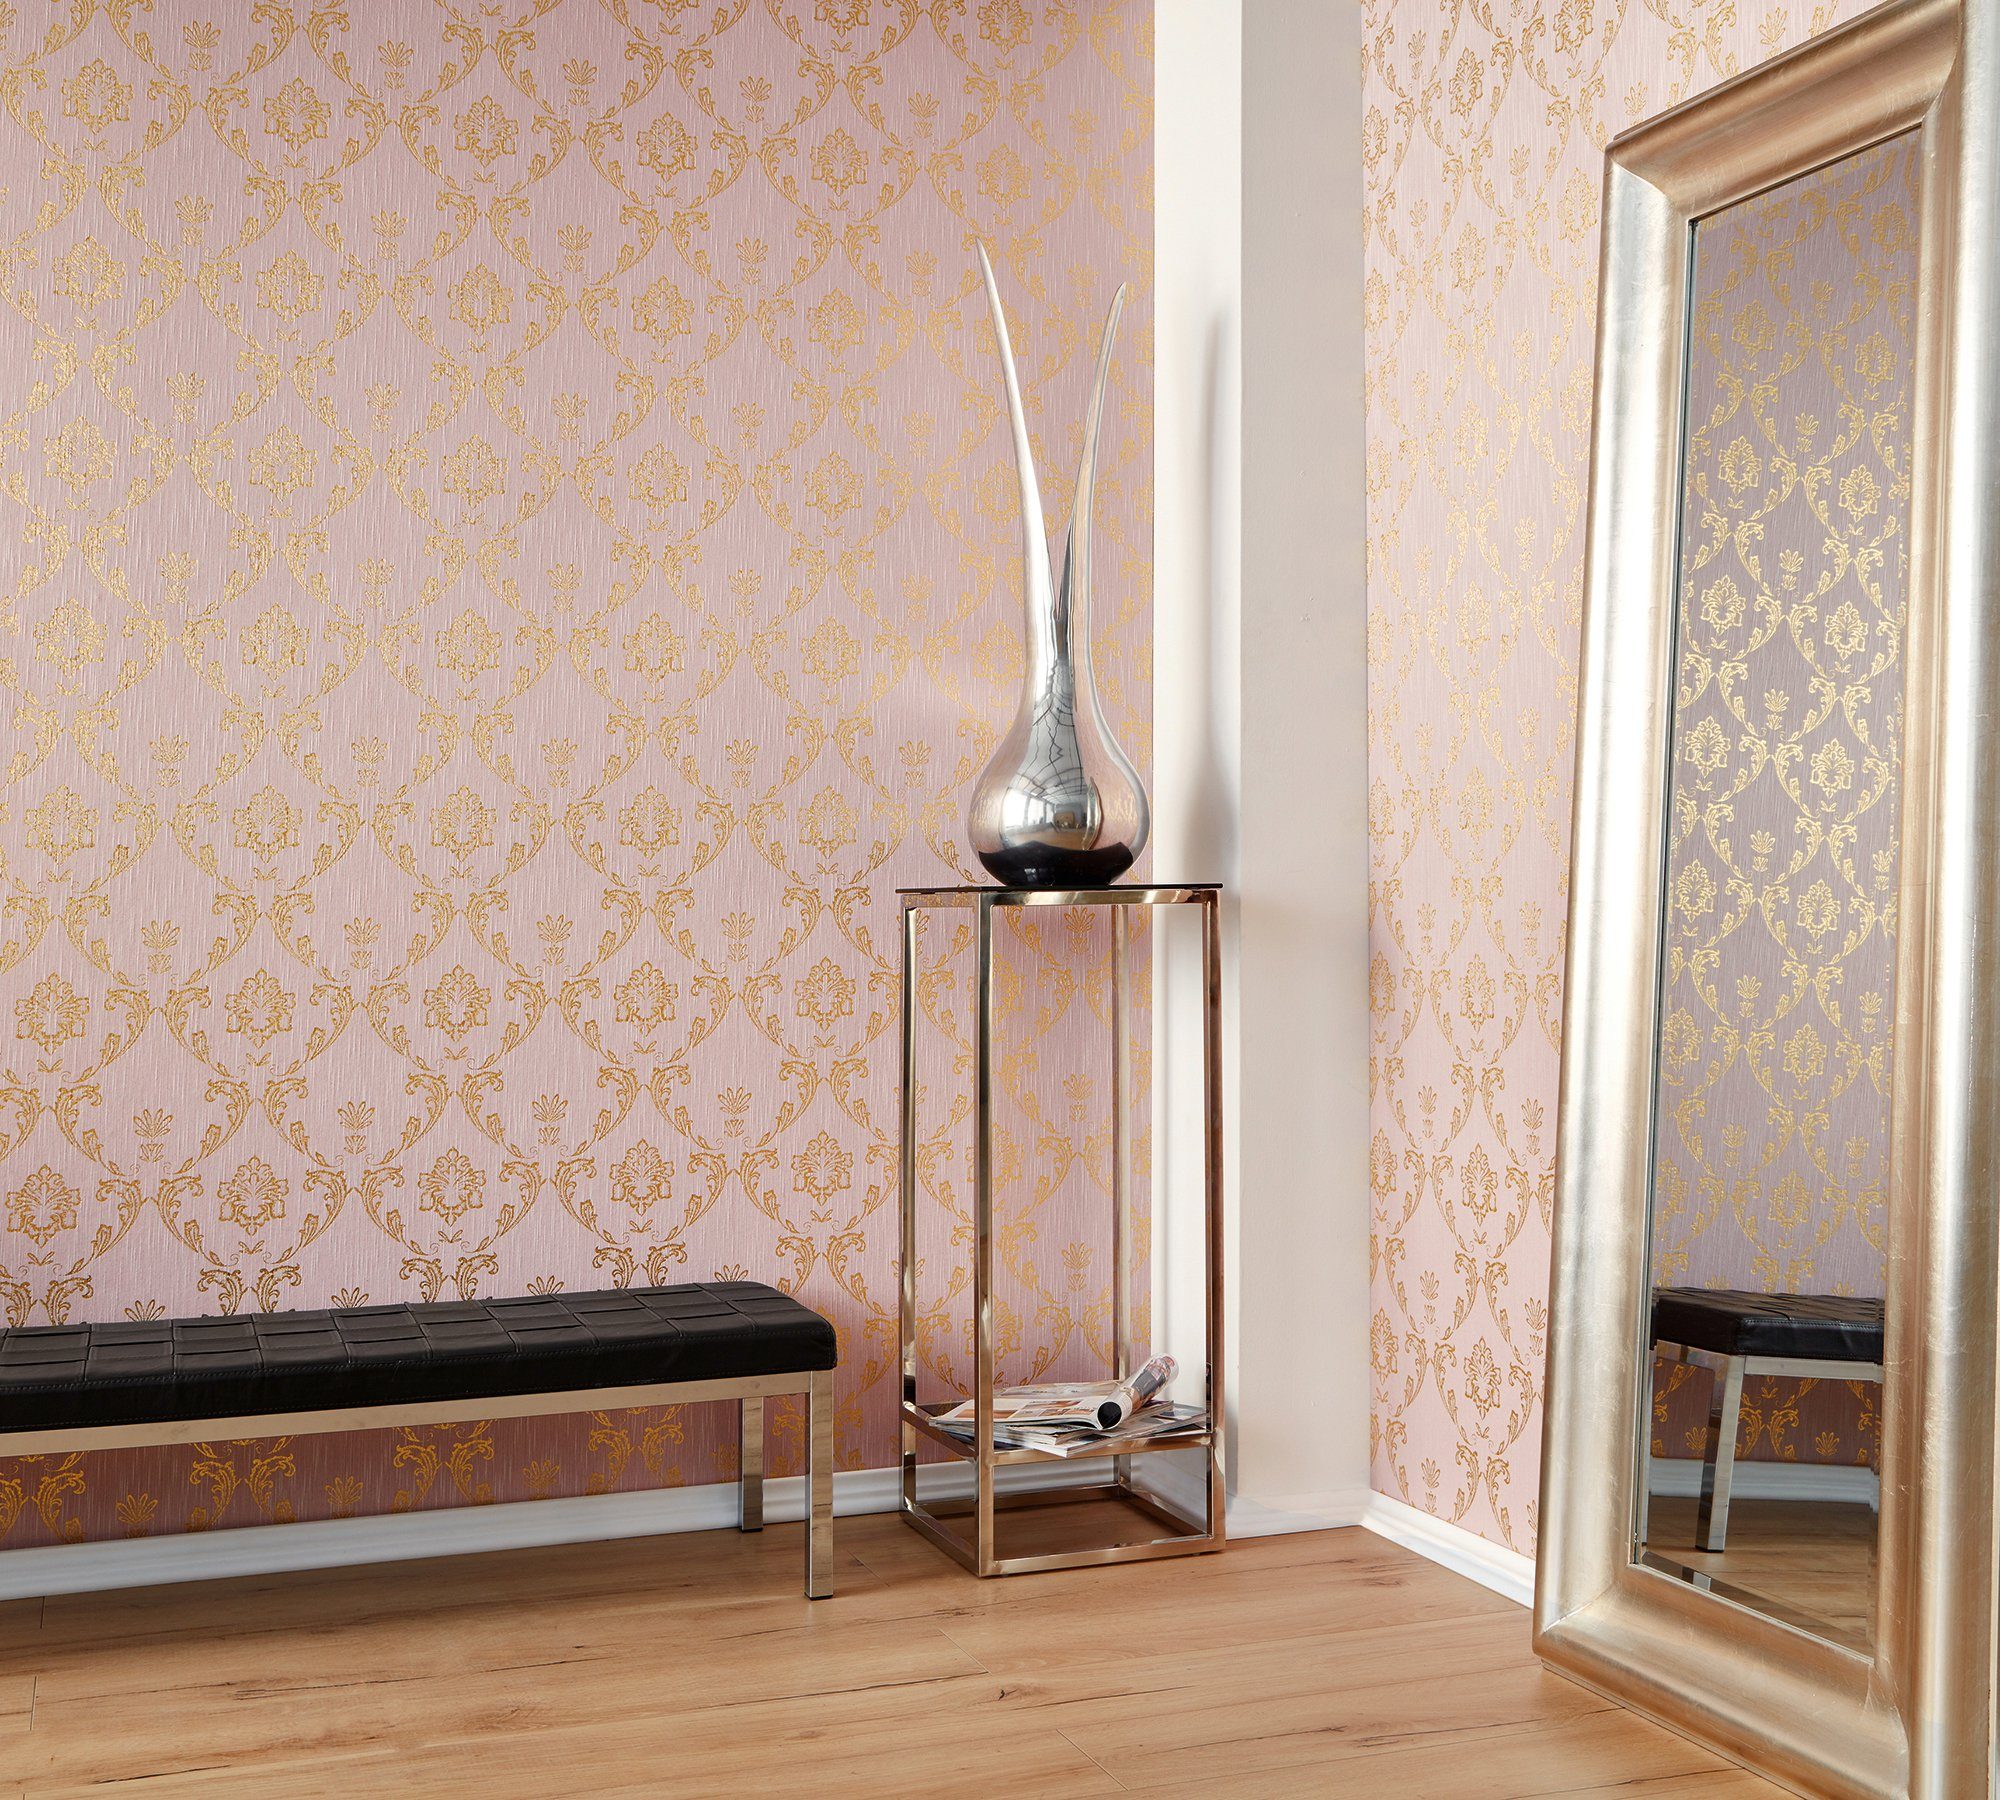 Architects Paper Textiltapete Metallic Ornament gold/rosa Silk, samtig, matt, Tapete Barock, Barock glänzend